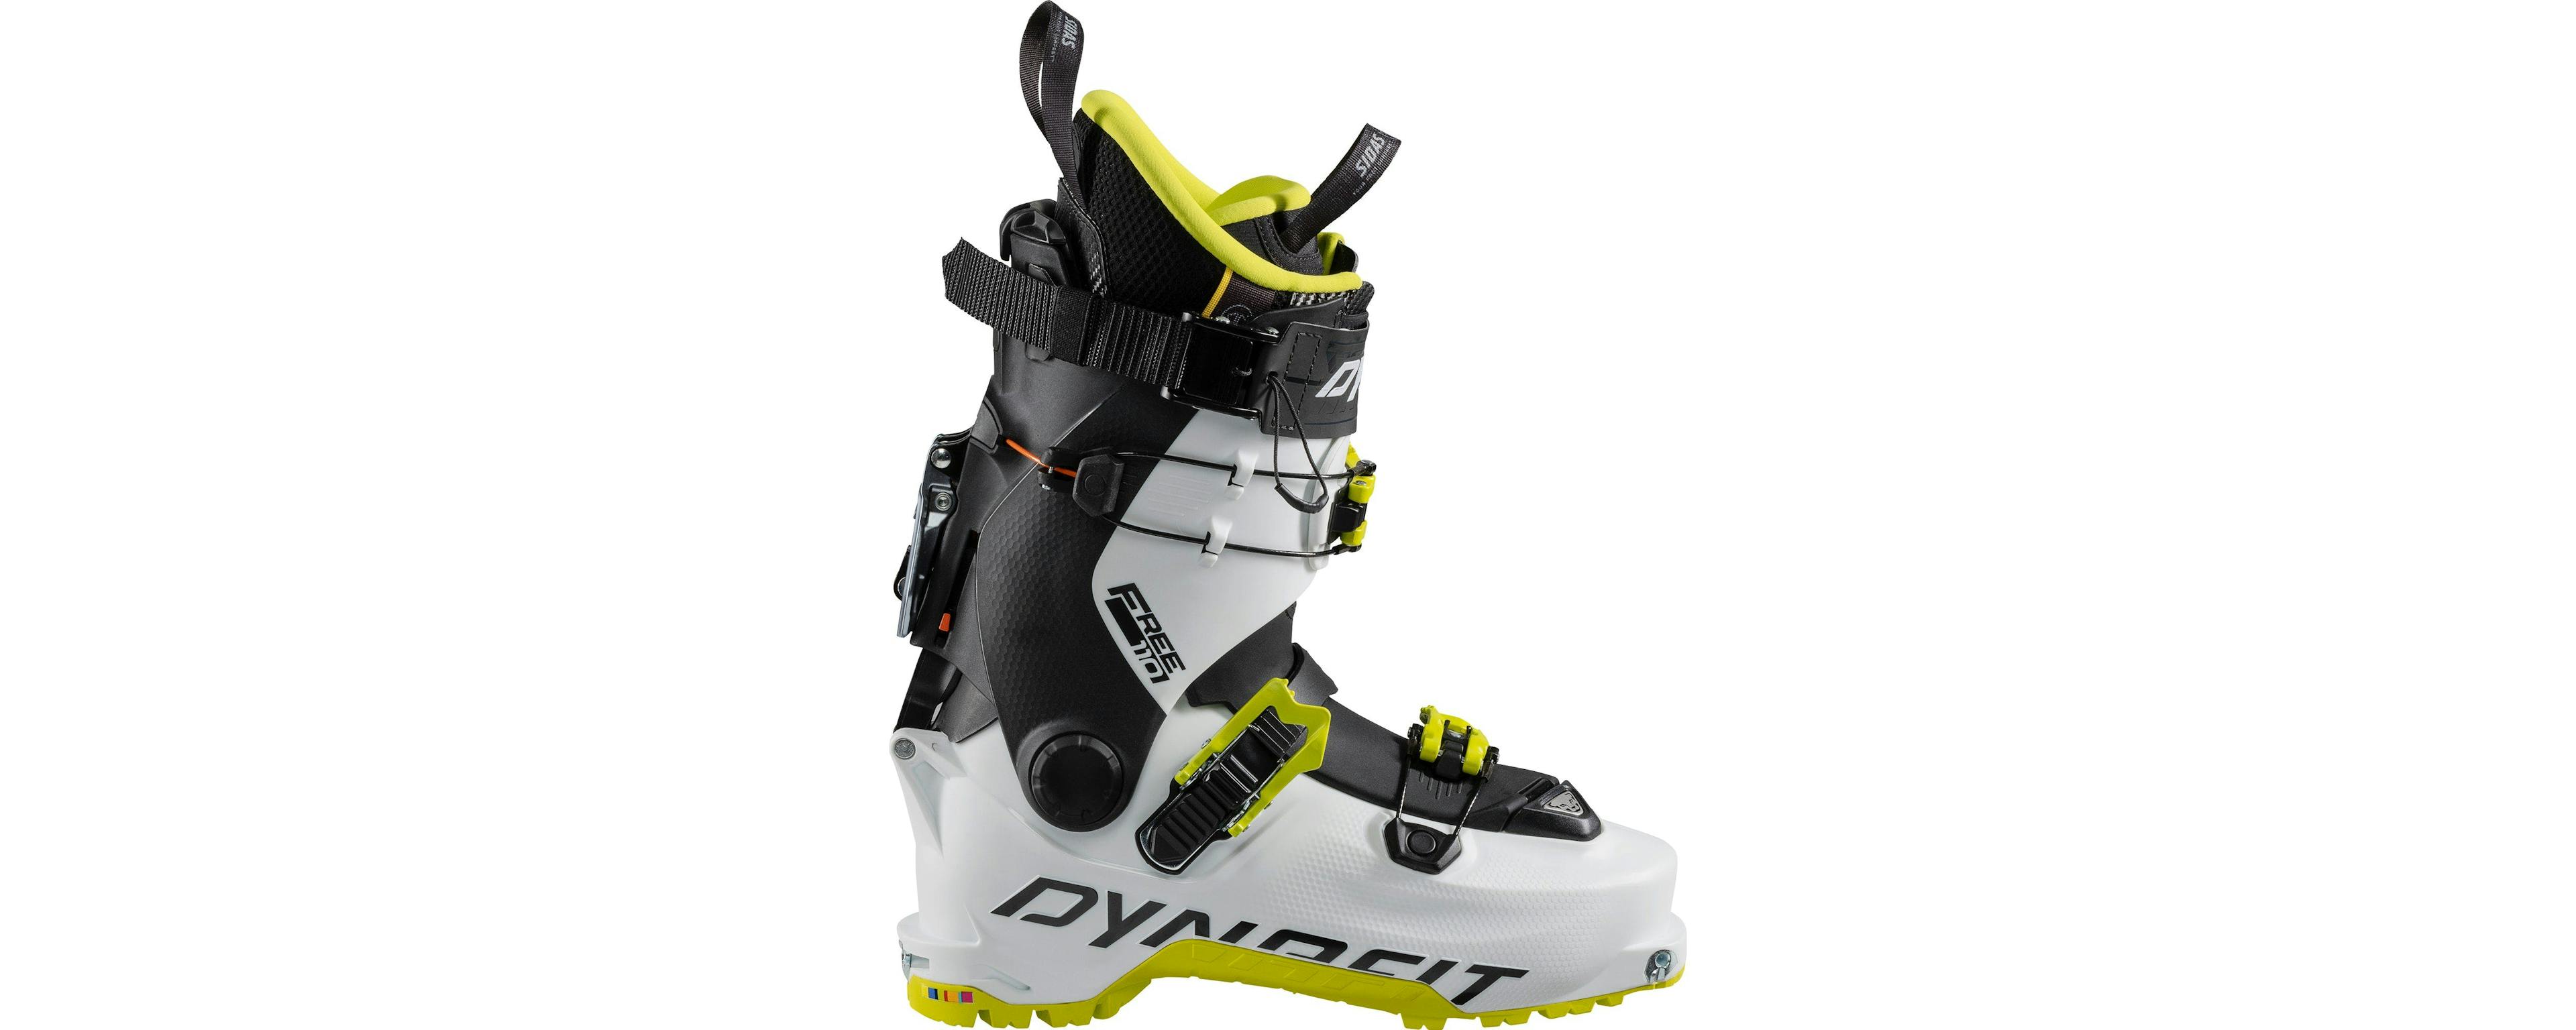 White Dynafit backcountry ski boot